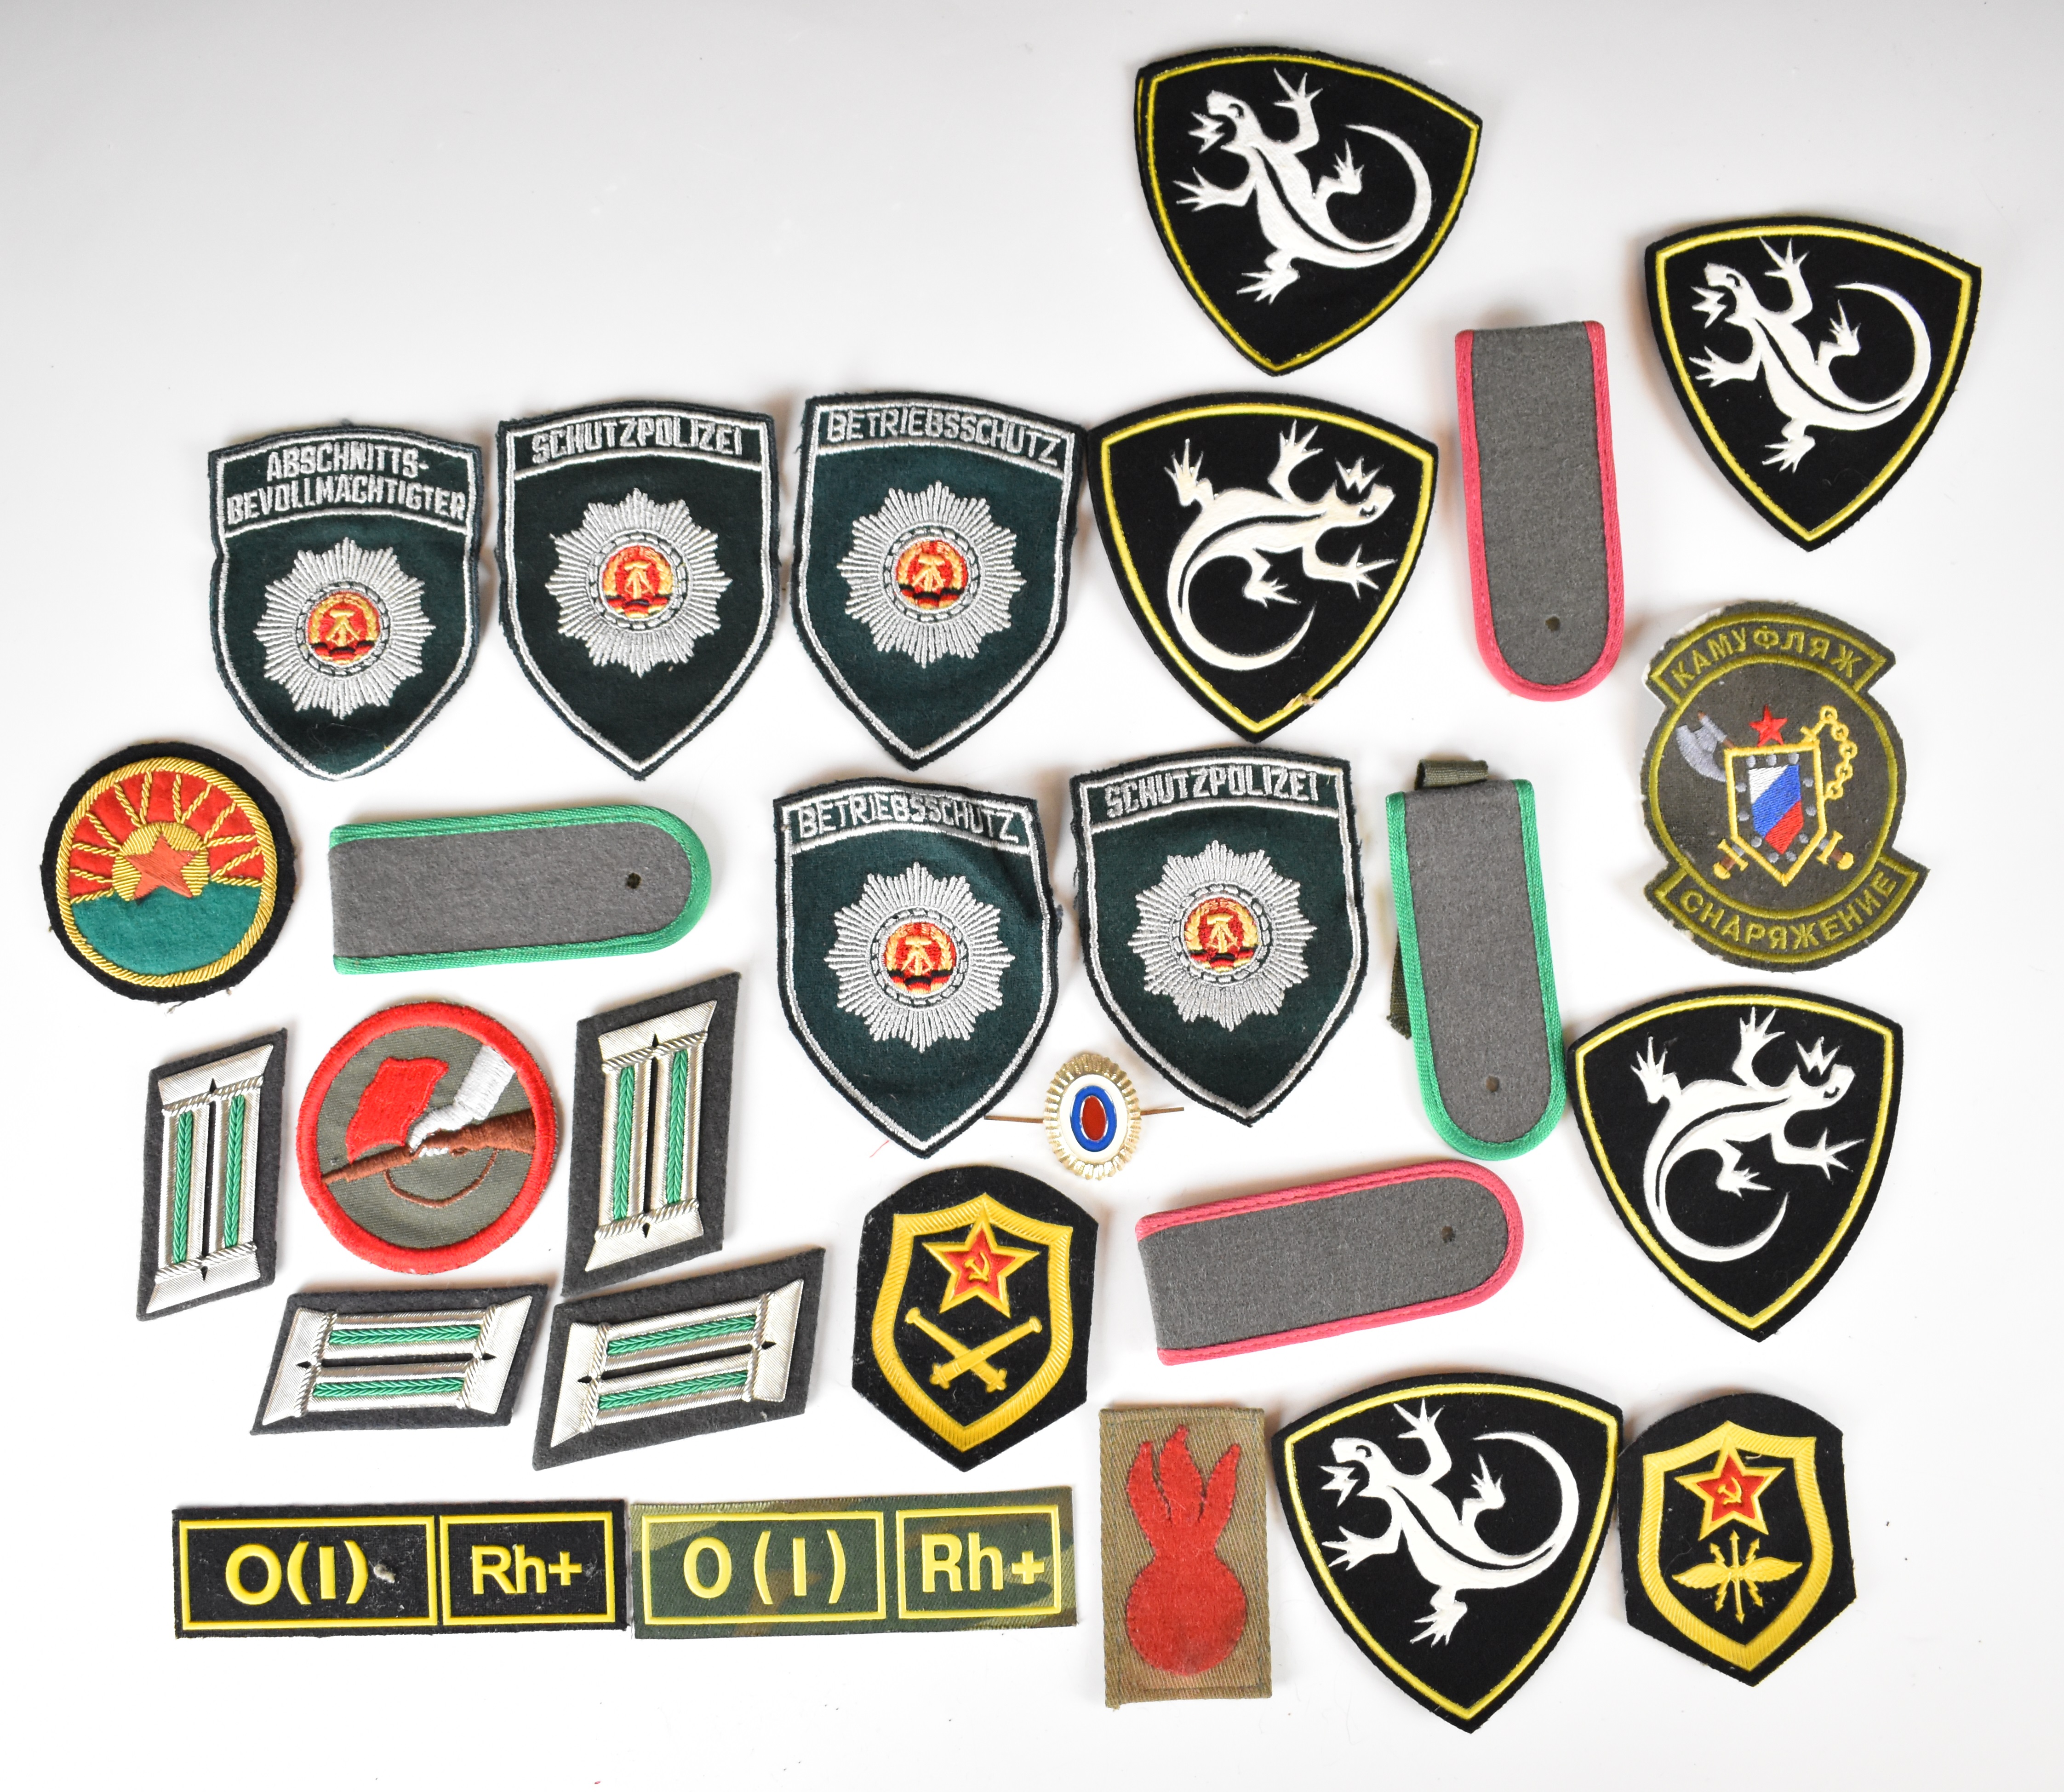 Russian / East German cloth badges, rank insignia etc